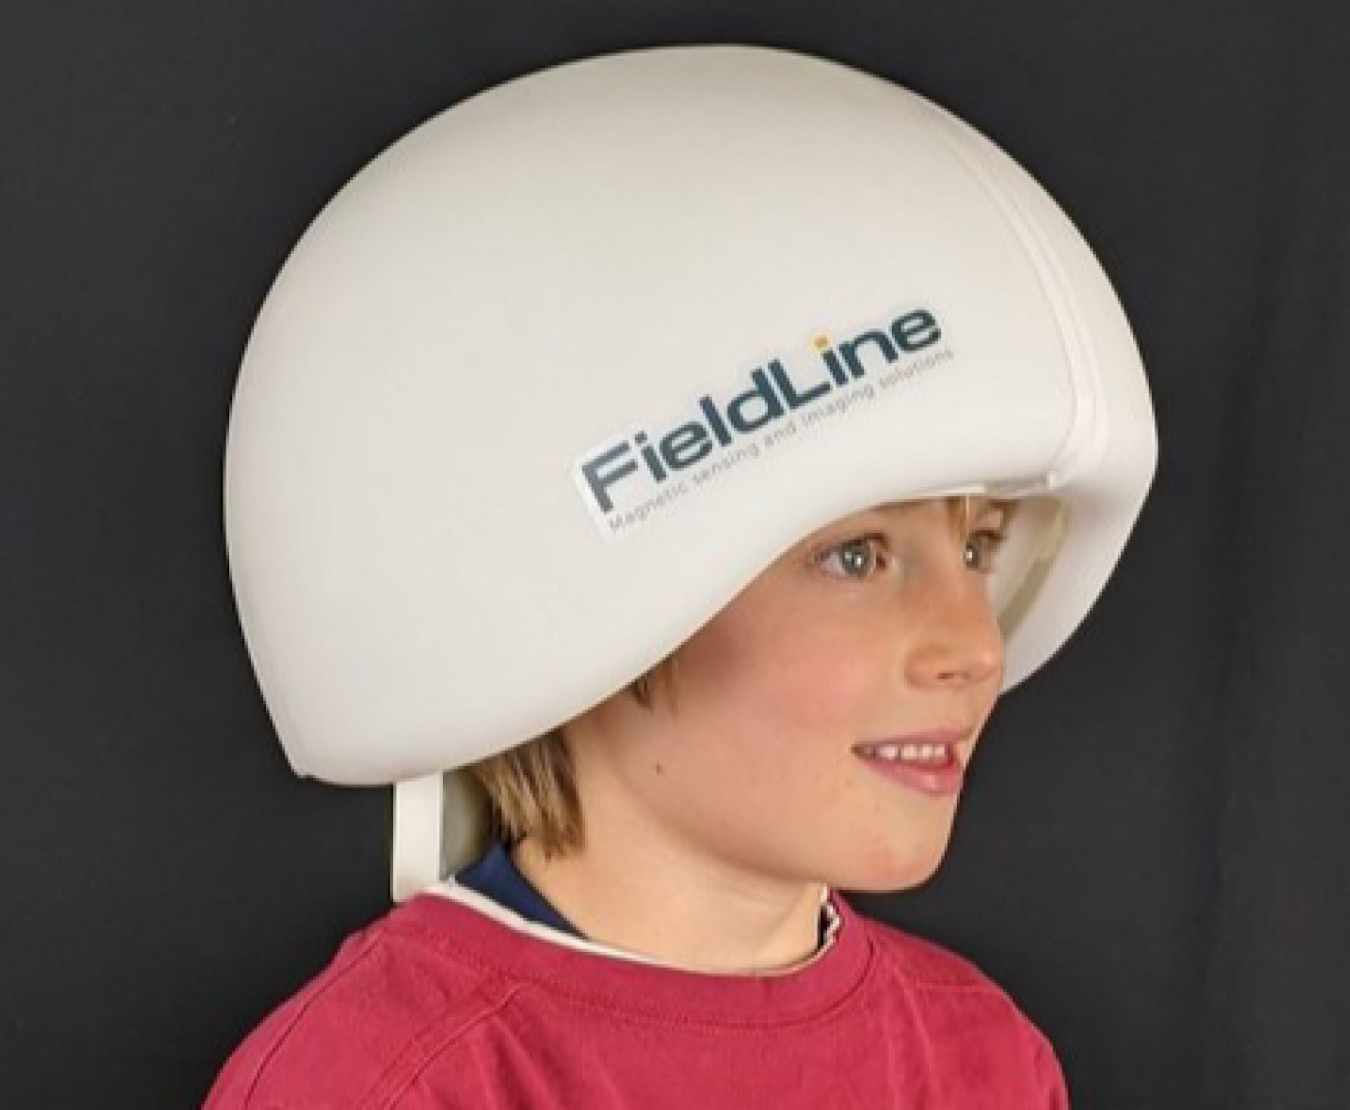 Smiling child wearing a HEDscan system helmet by Colorado Manufacturer FieldLine.